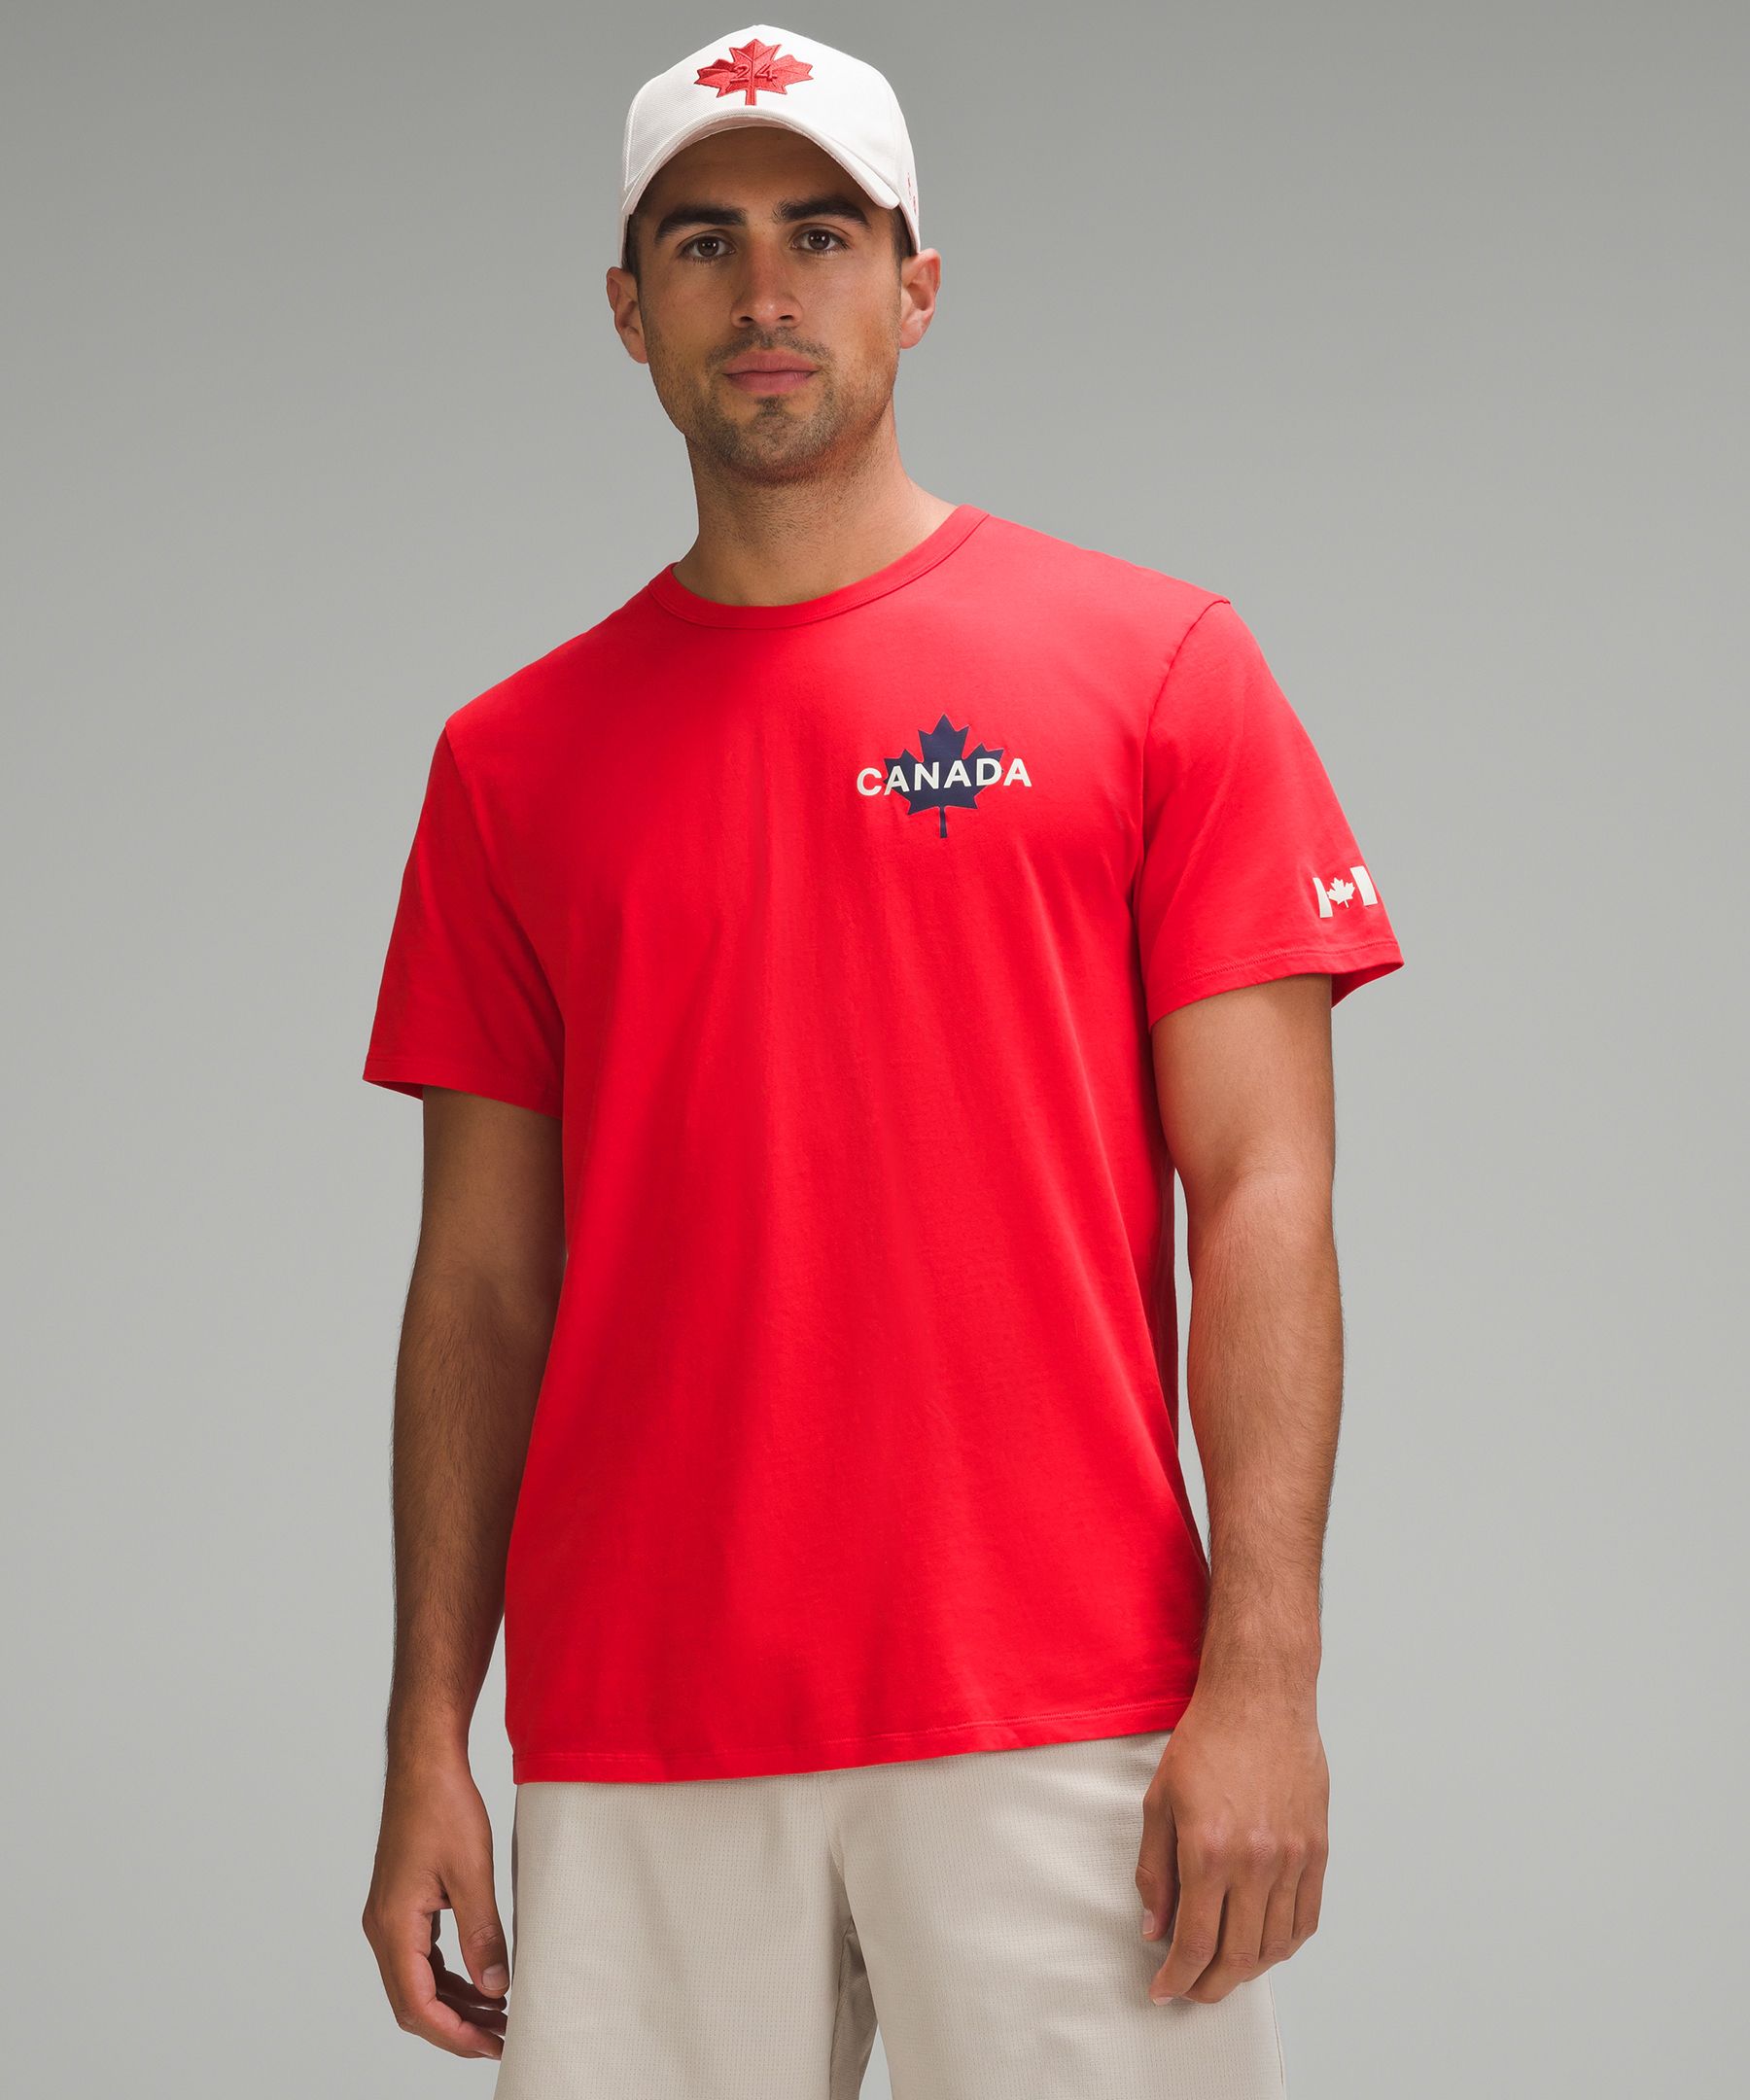 Team Canada Men's Cotton Jersey Graphic T-Shirt *COC Logo | Short Sleeve Shirts & Tee's